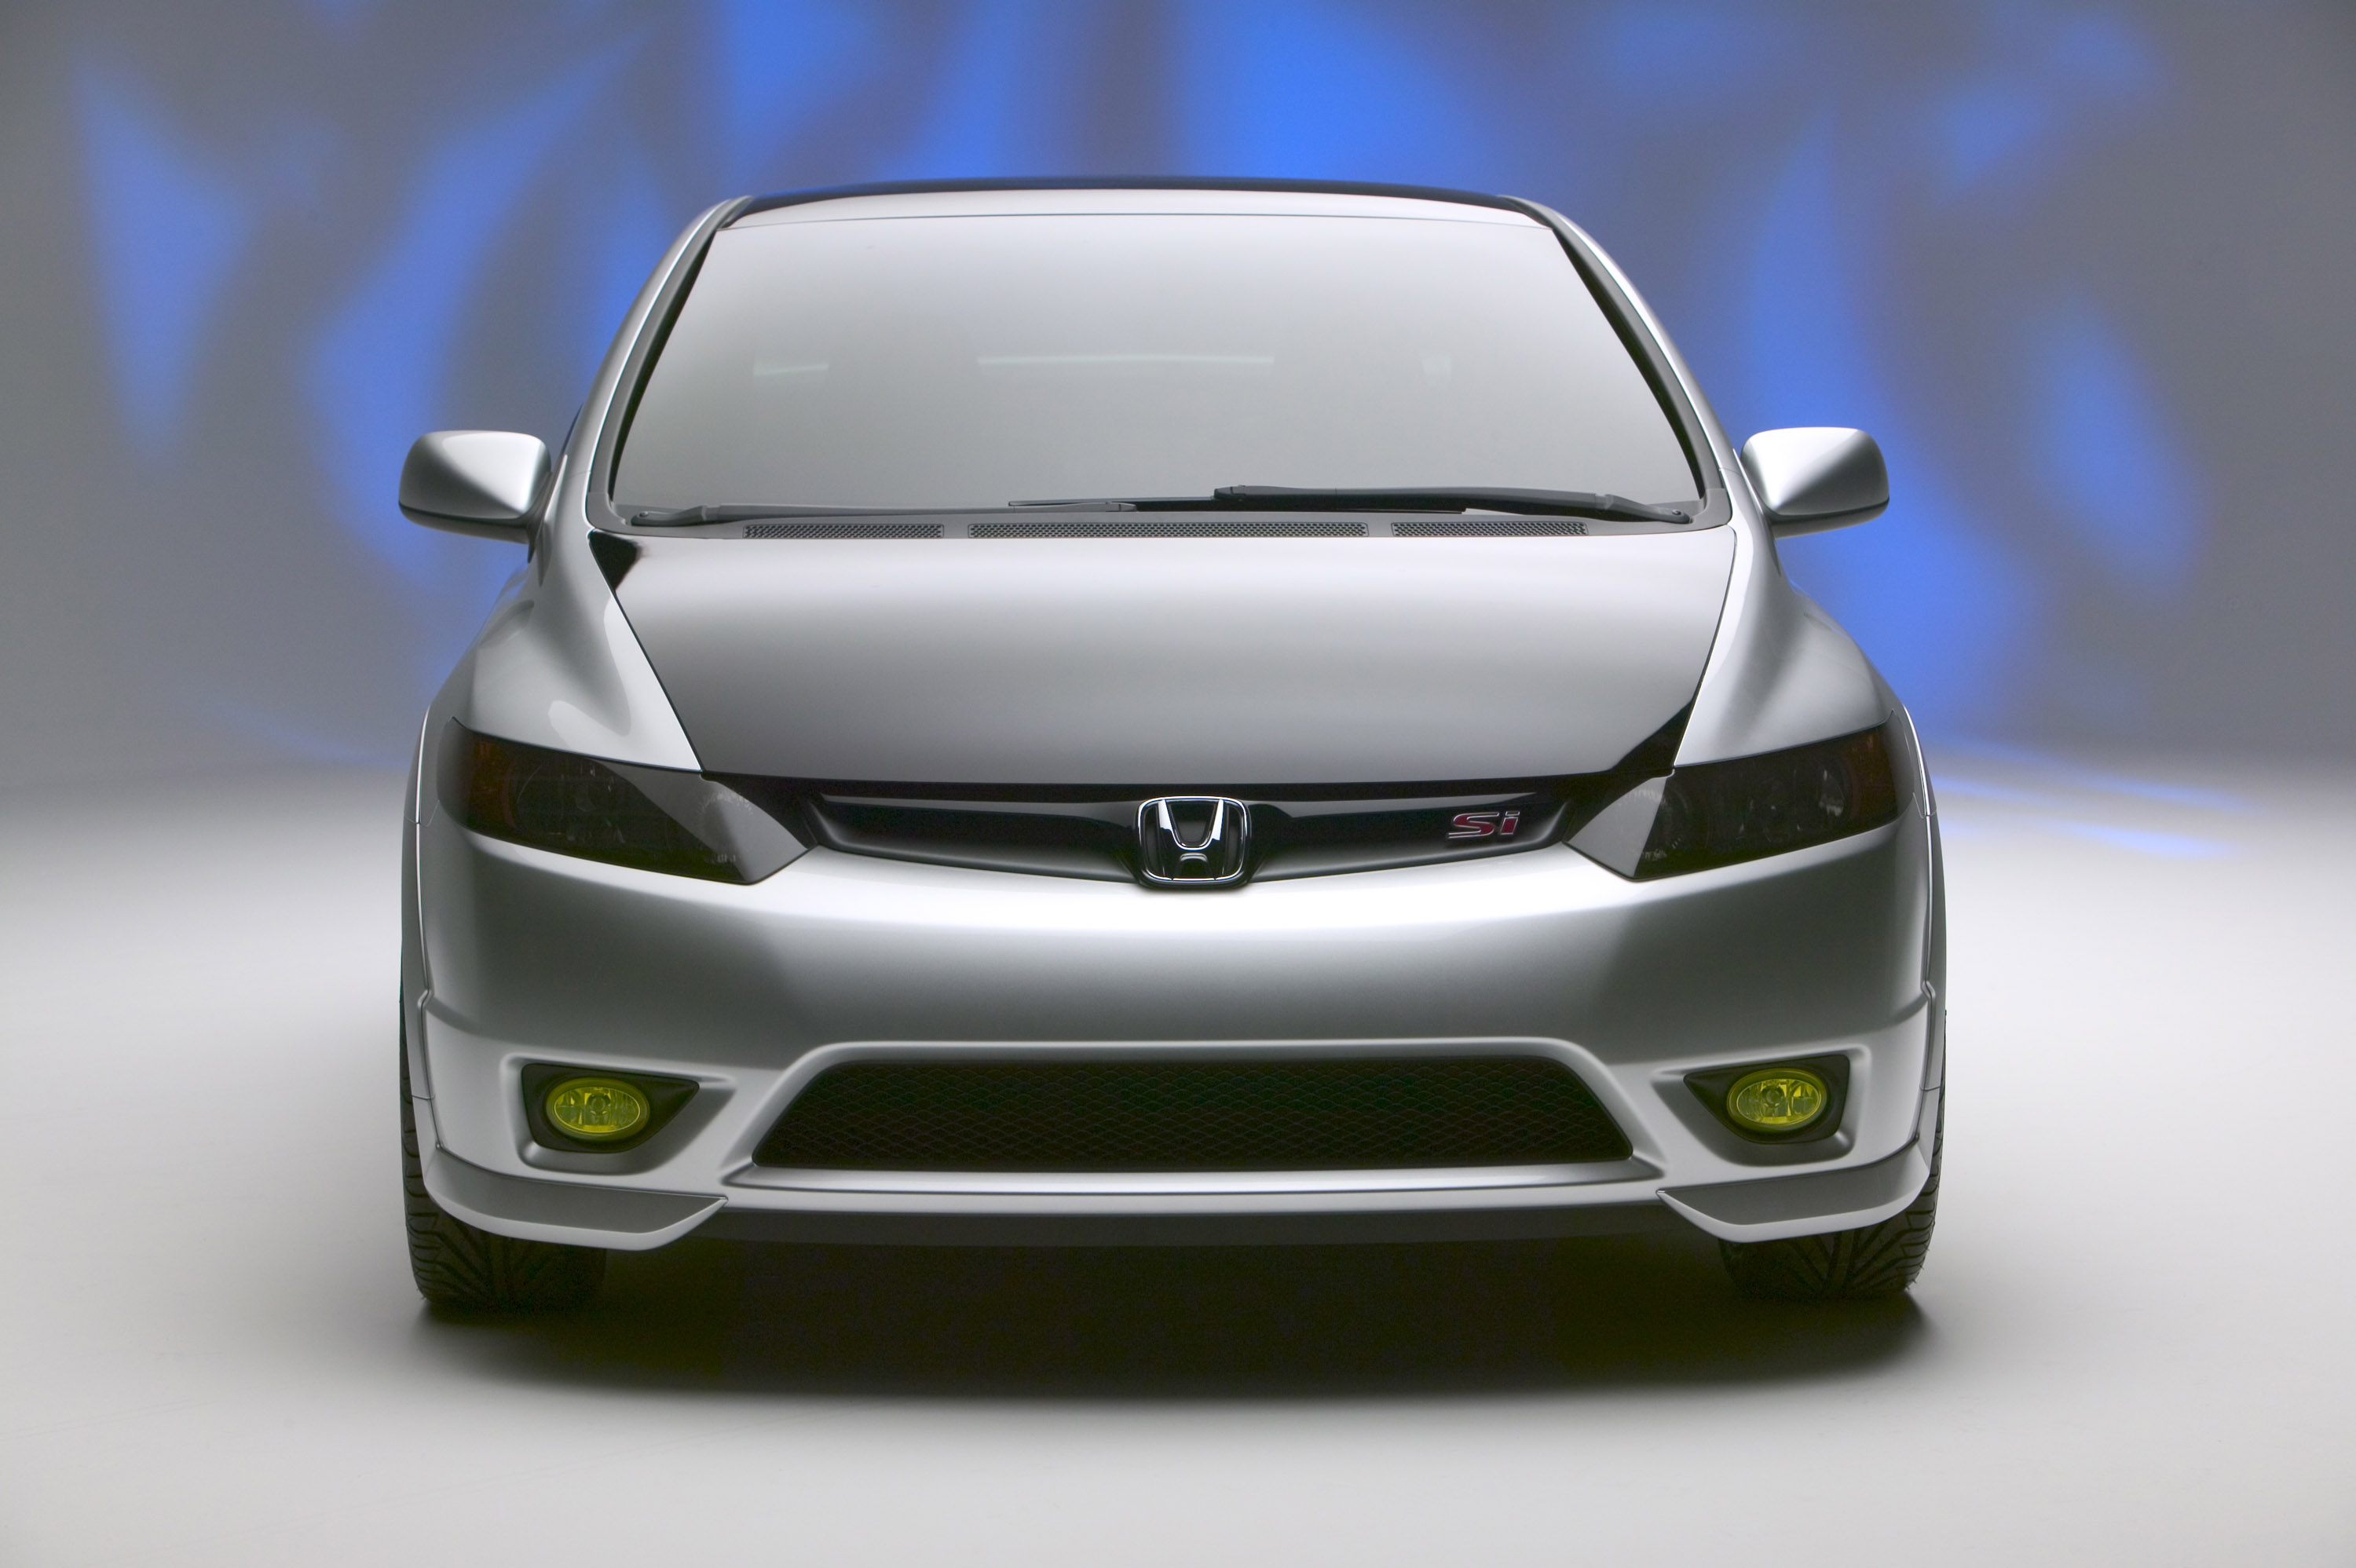 Honda Civic Si Concept HD Pictures Carsinvasion